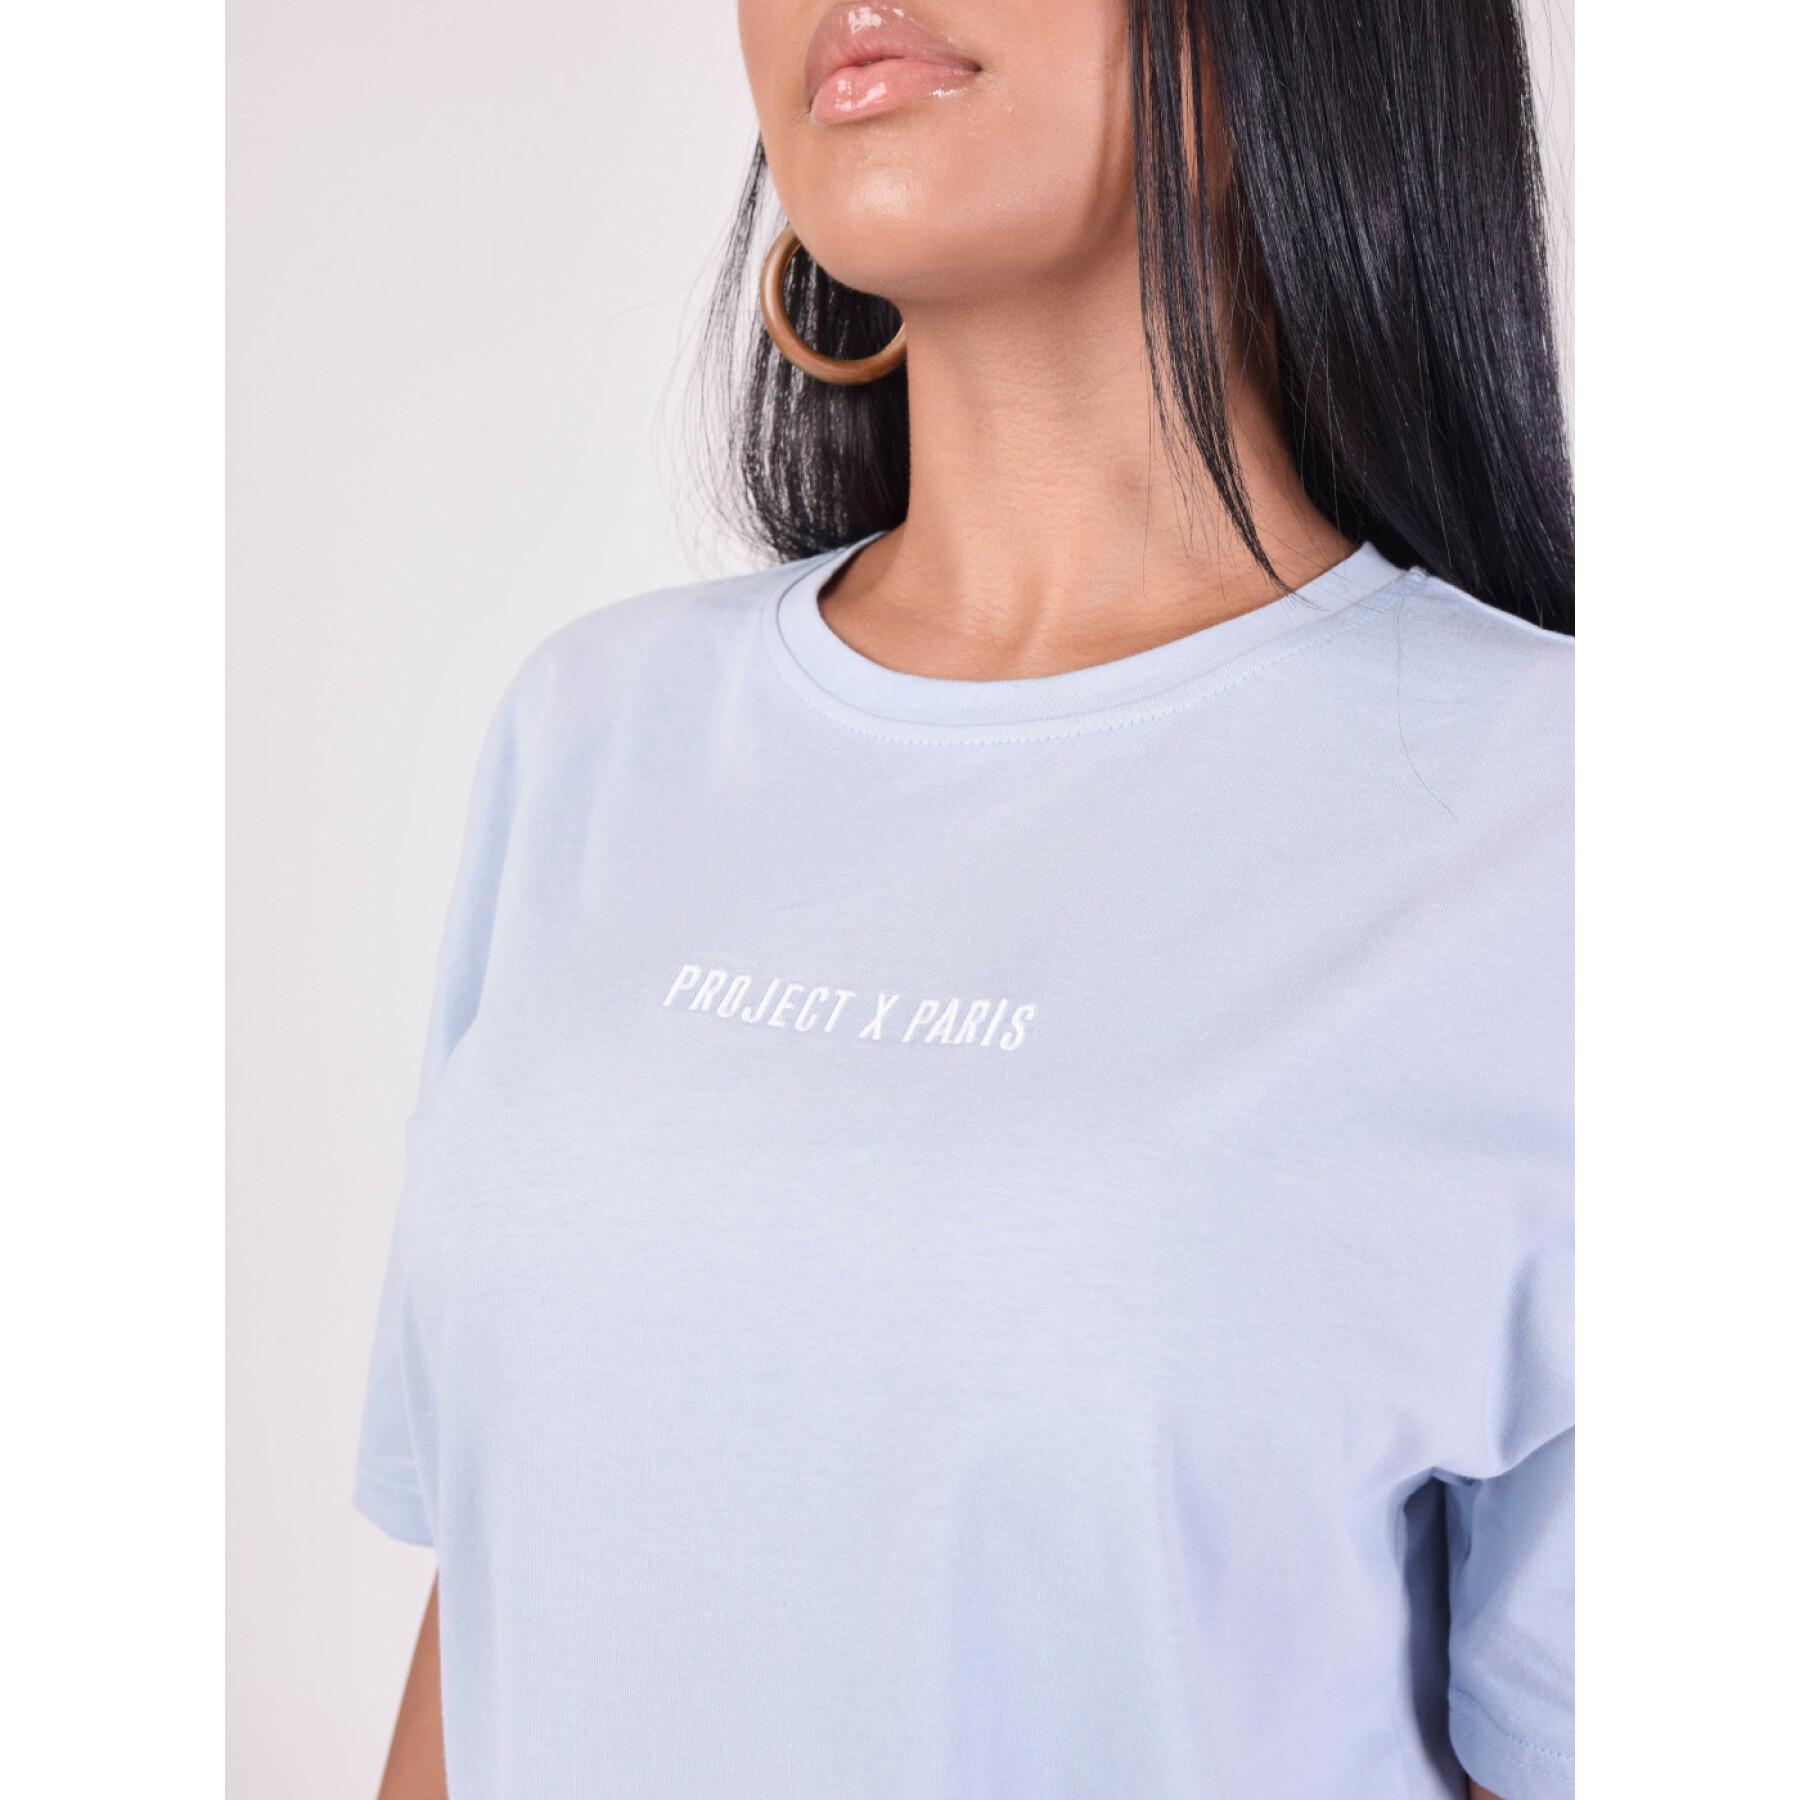 T-shirt mulher Loose Project X Paris